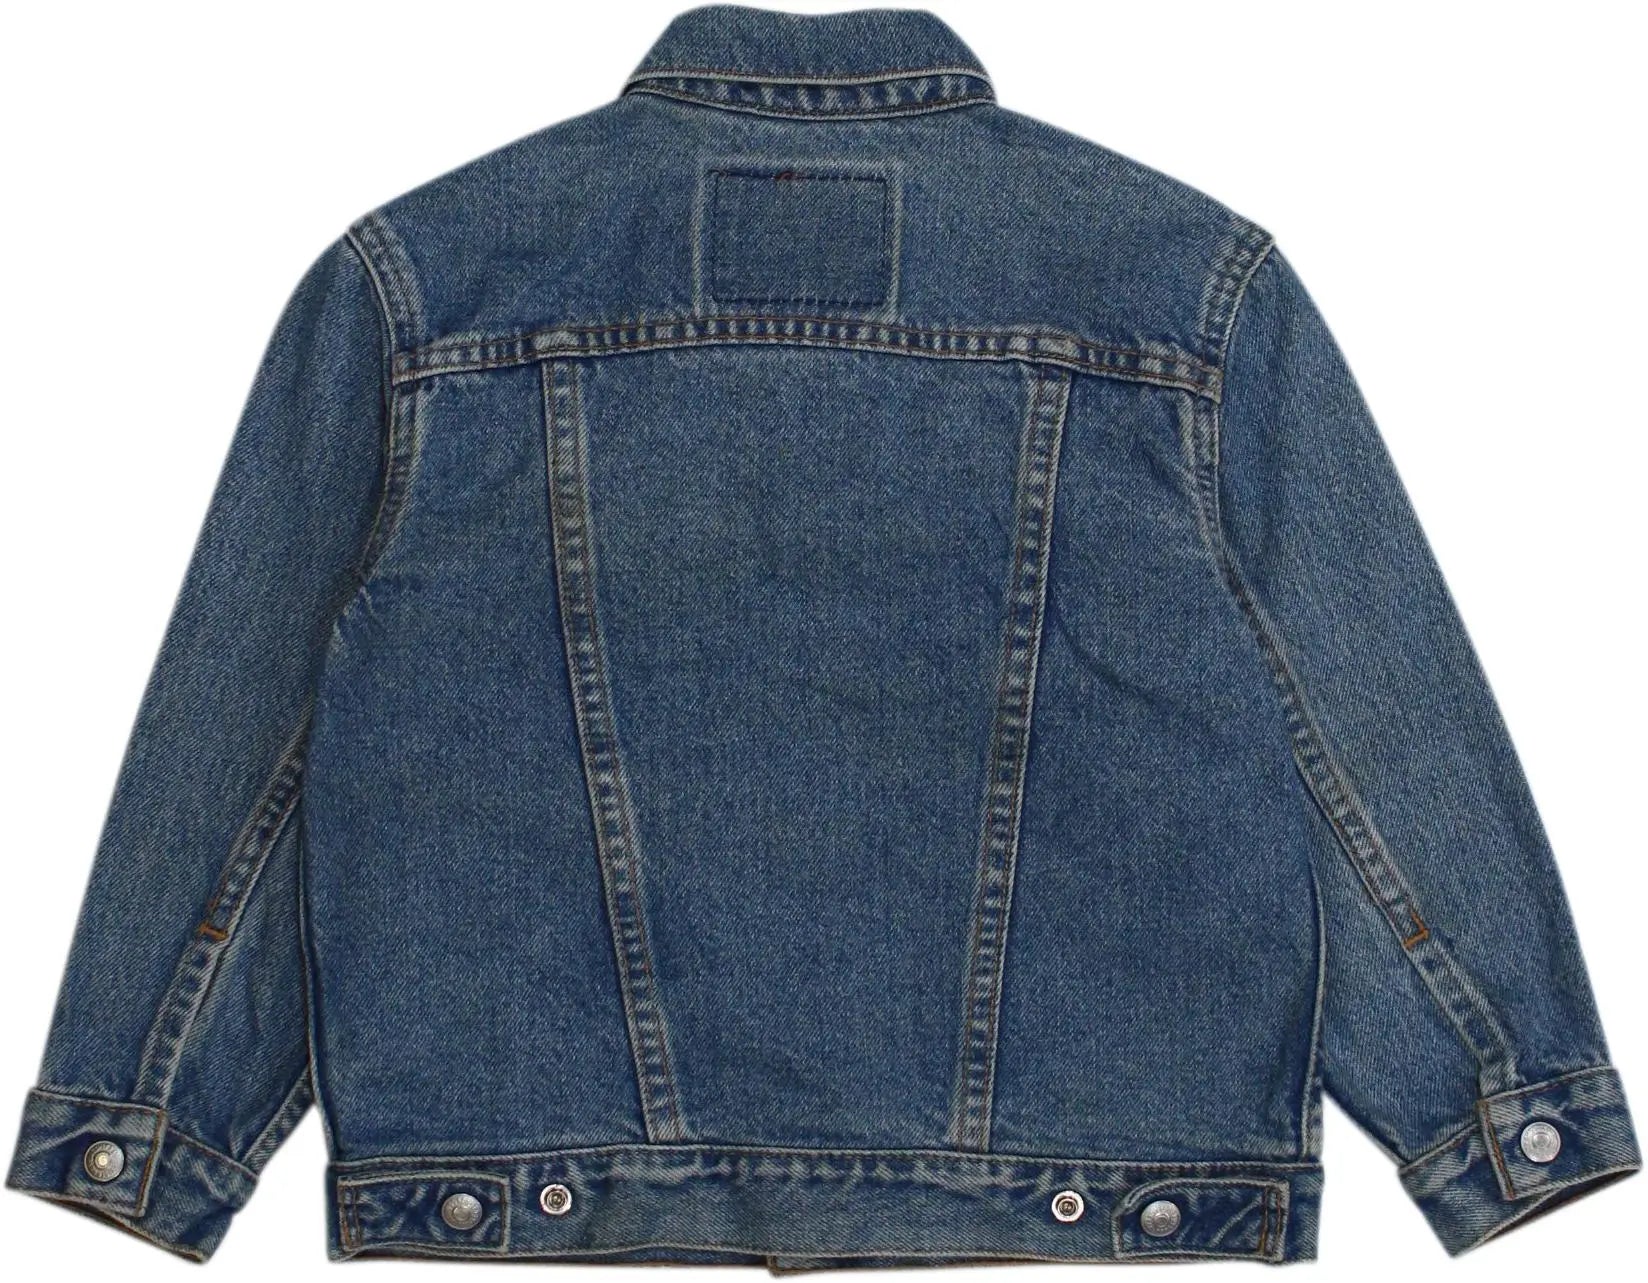 Levi's - Vintage Levi's Denim Jacket- ThriftTale.com - Vintage and second handclothing